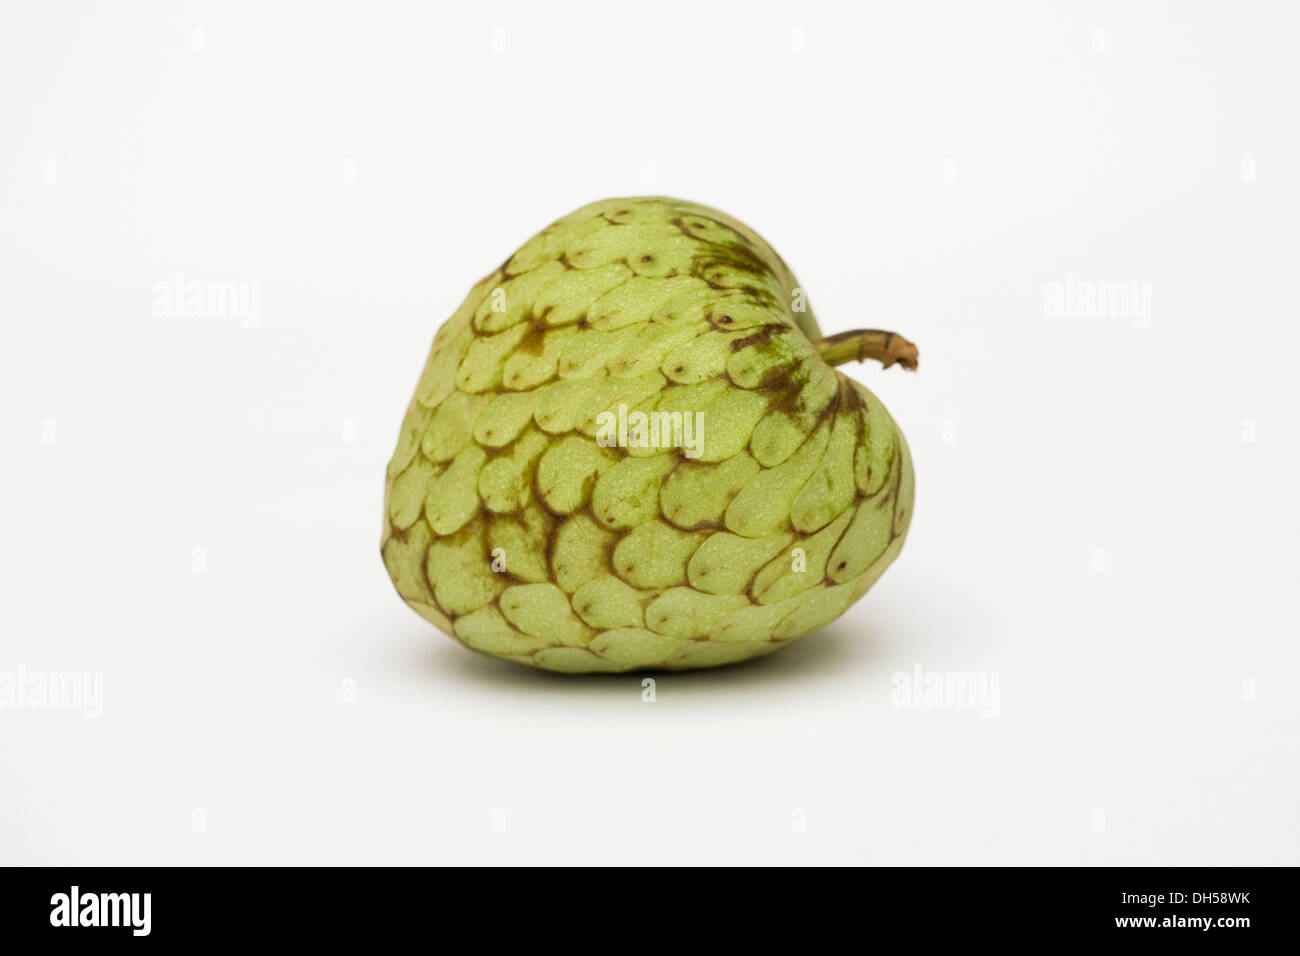 Cherimoya. A single custard apple on a white background. Stock Photo